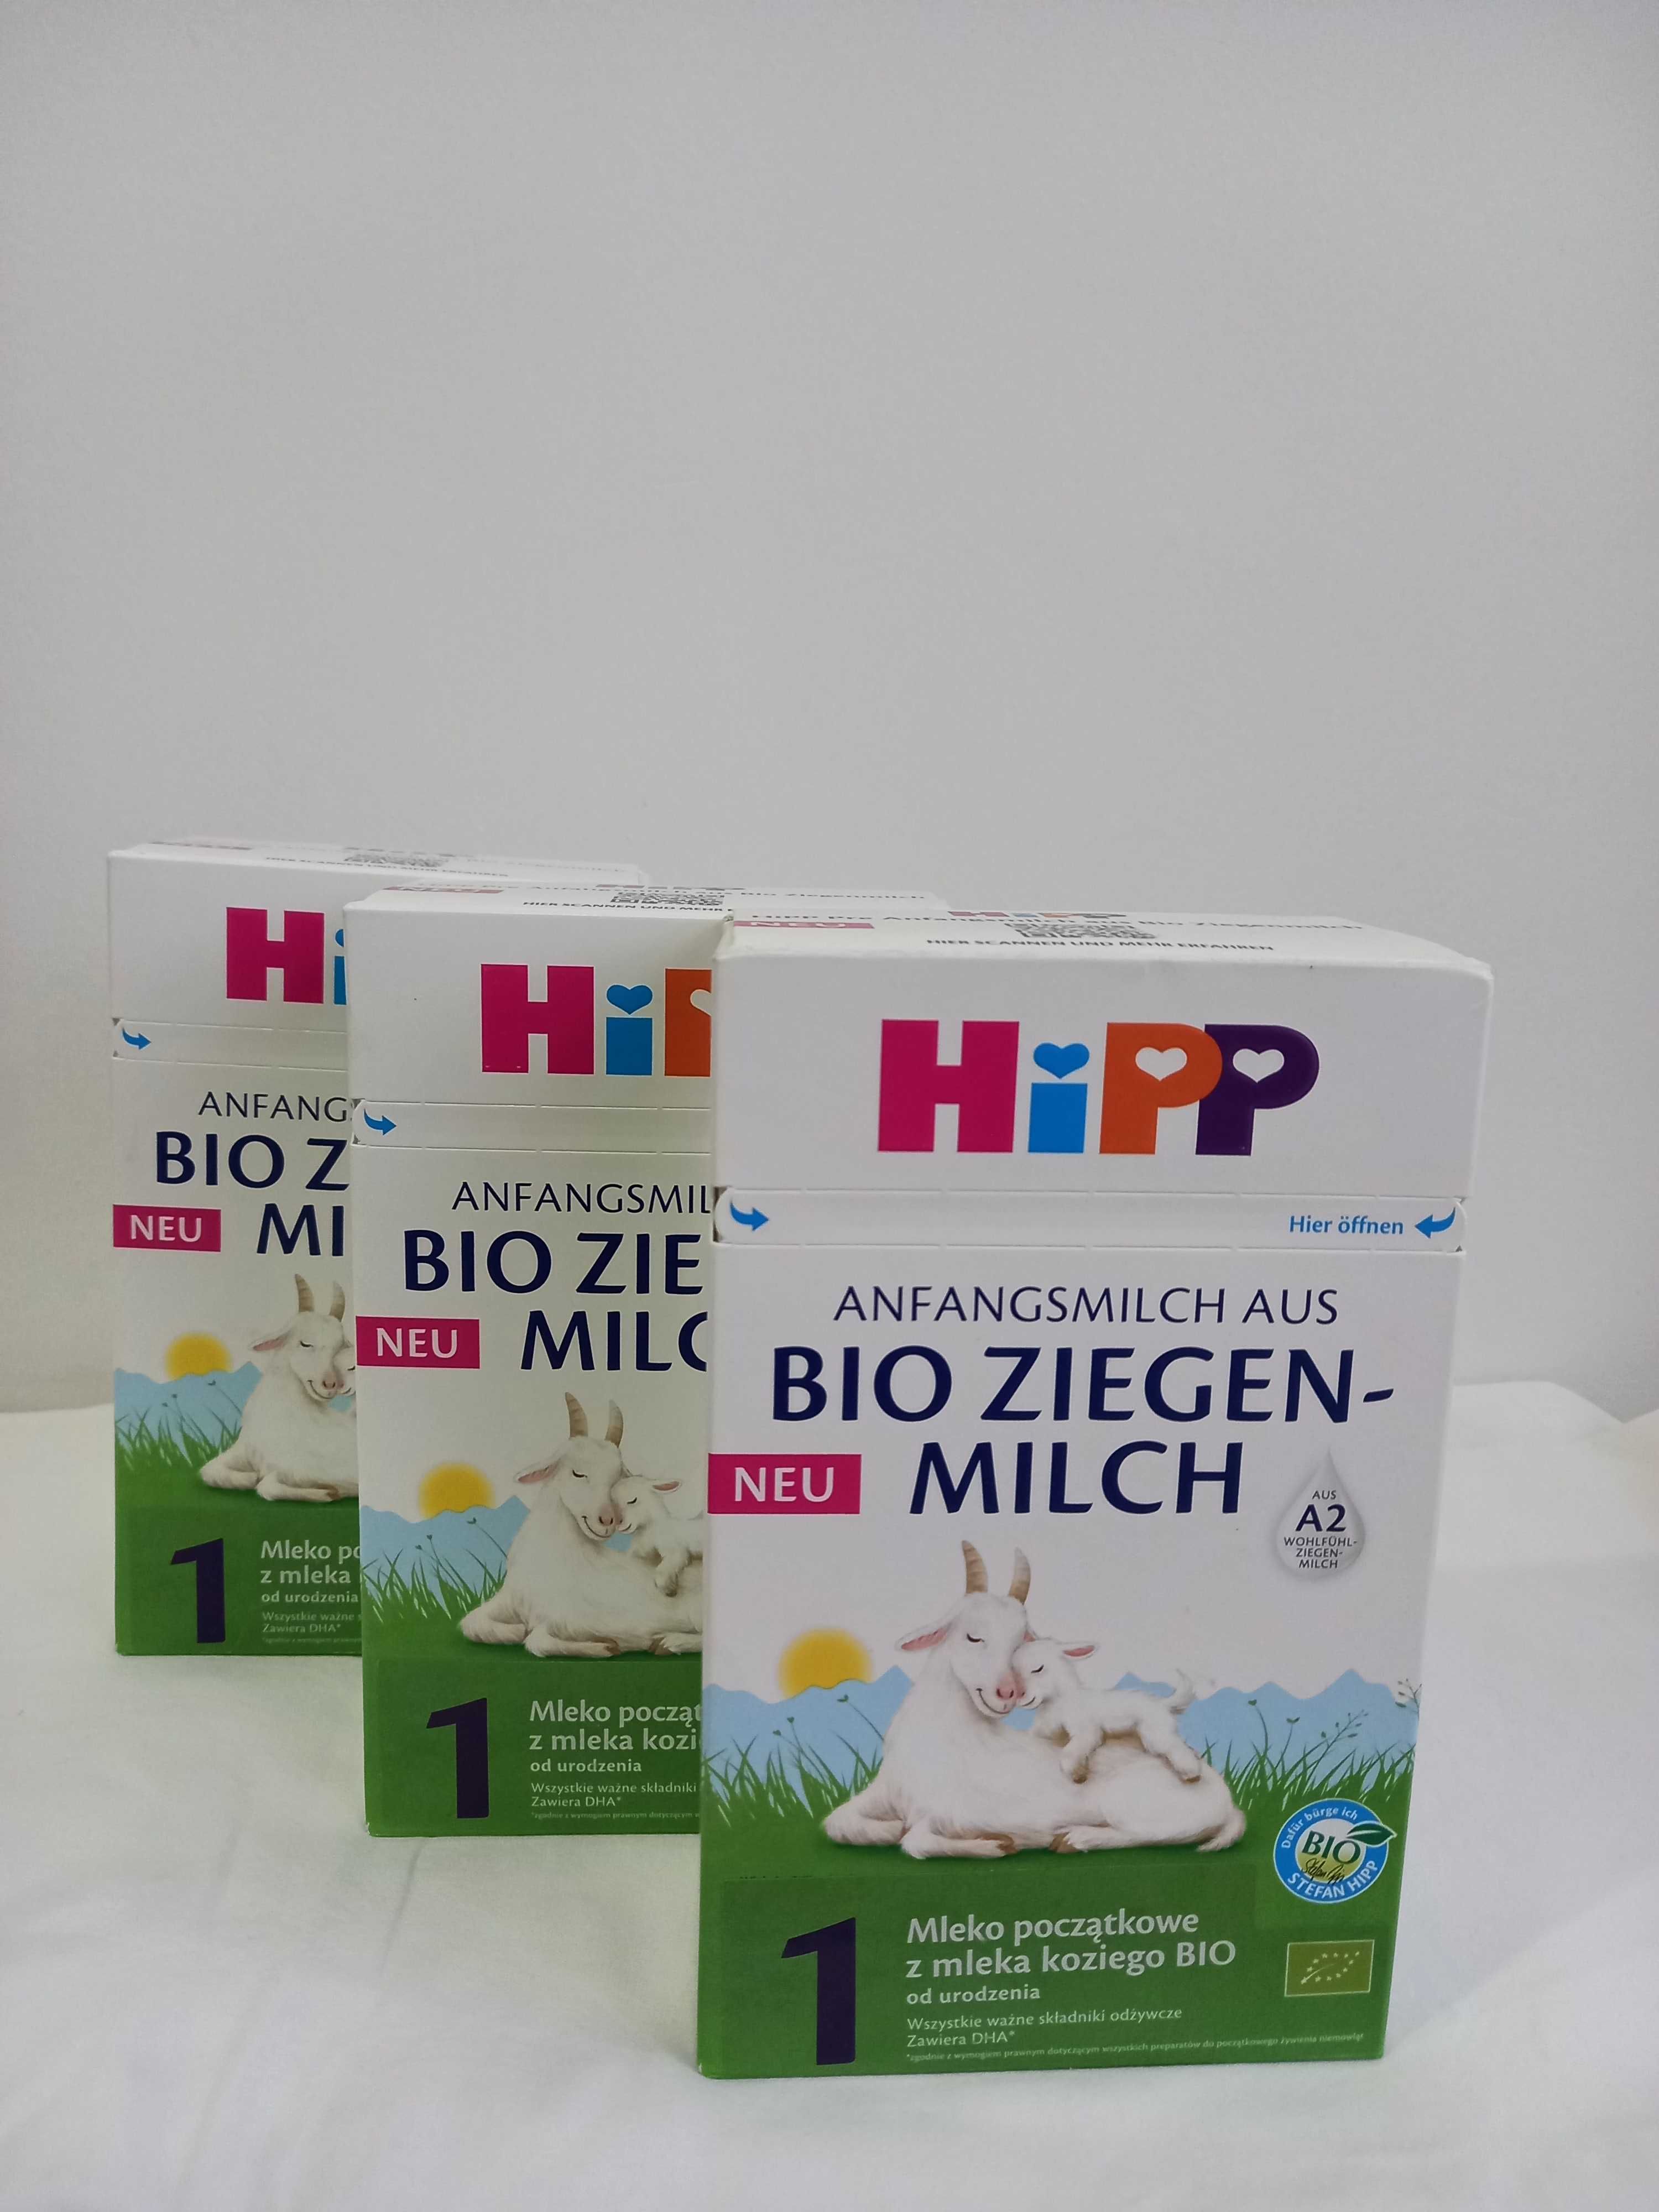 Hipp BIO Ziegenmilch суміш дятячого харчування